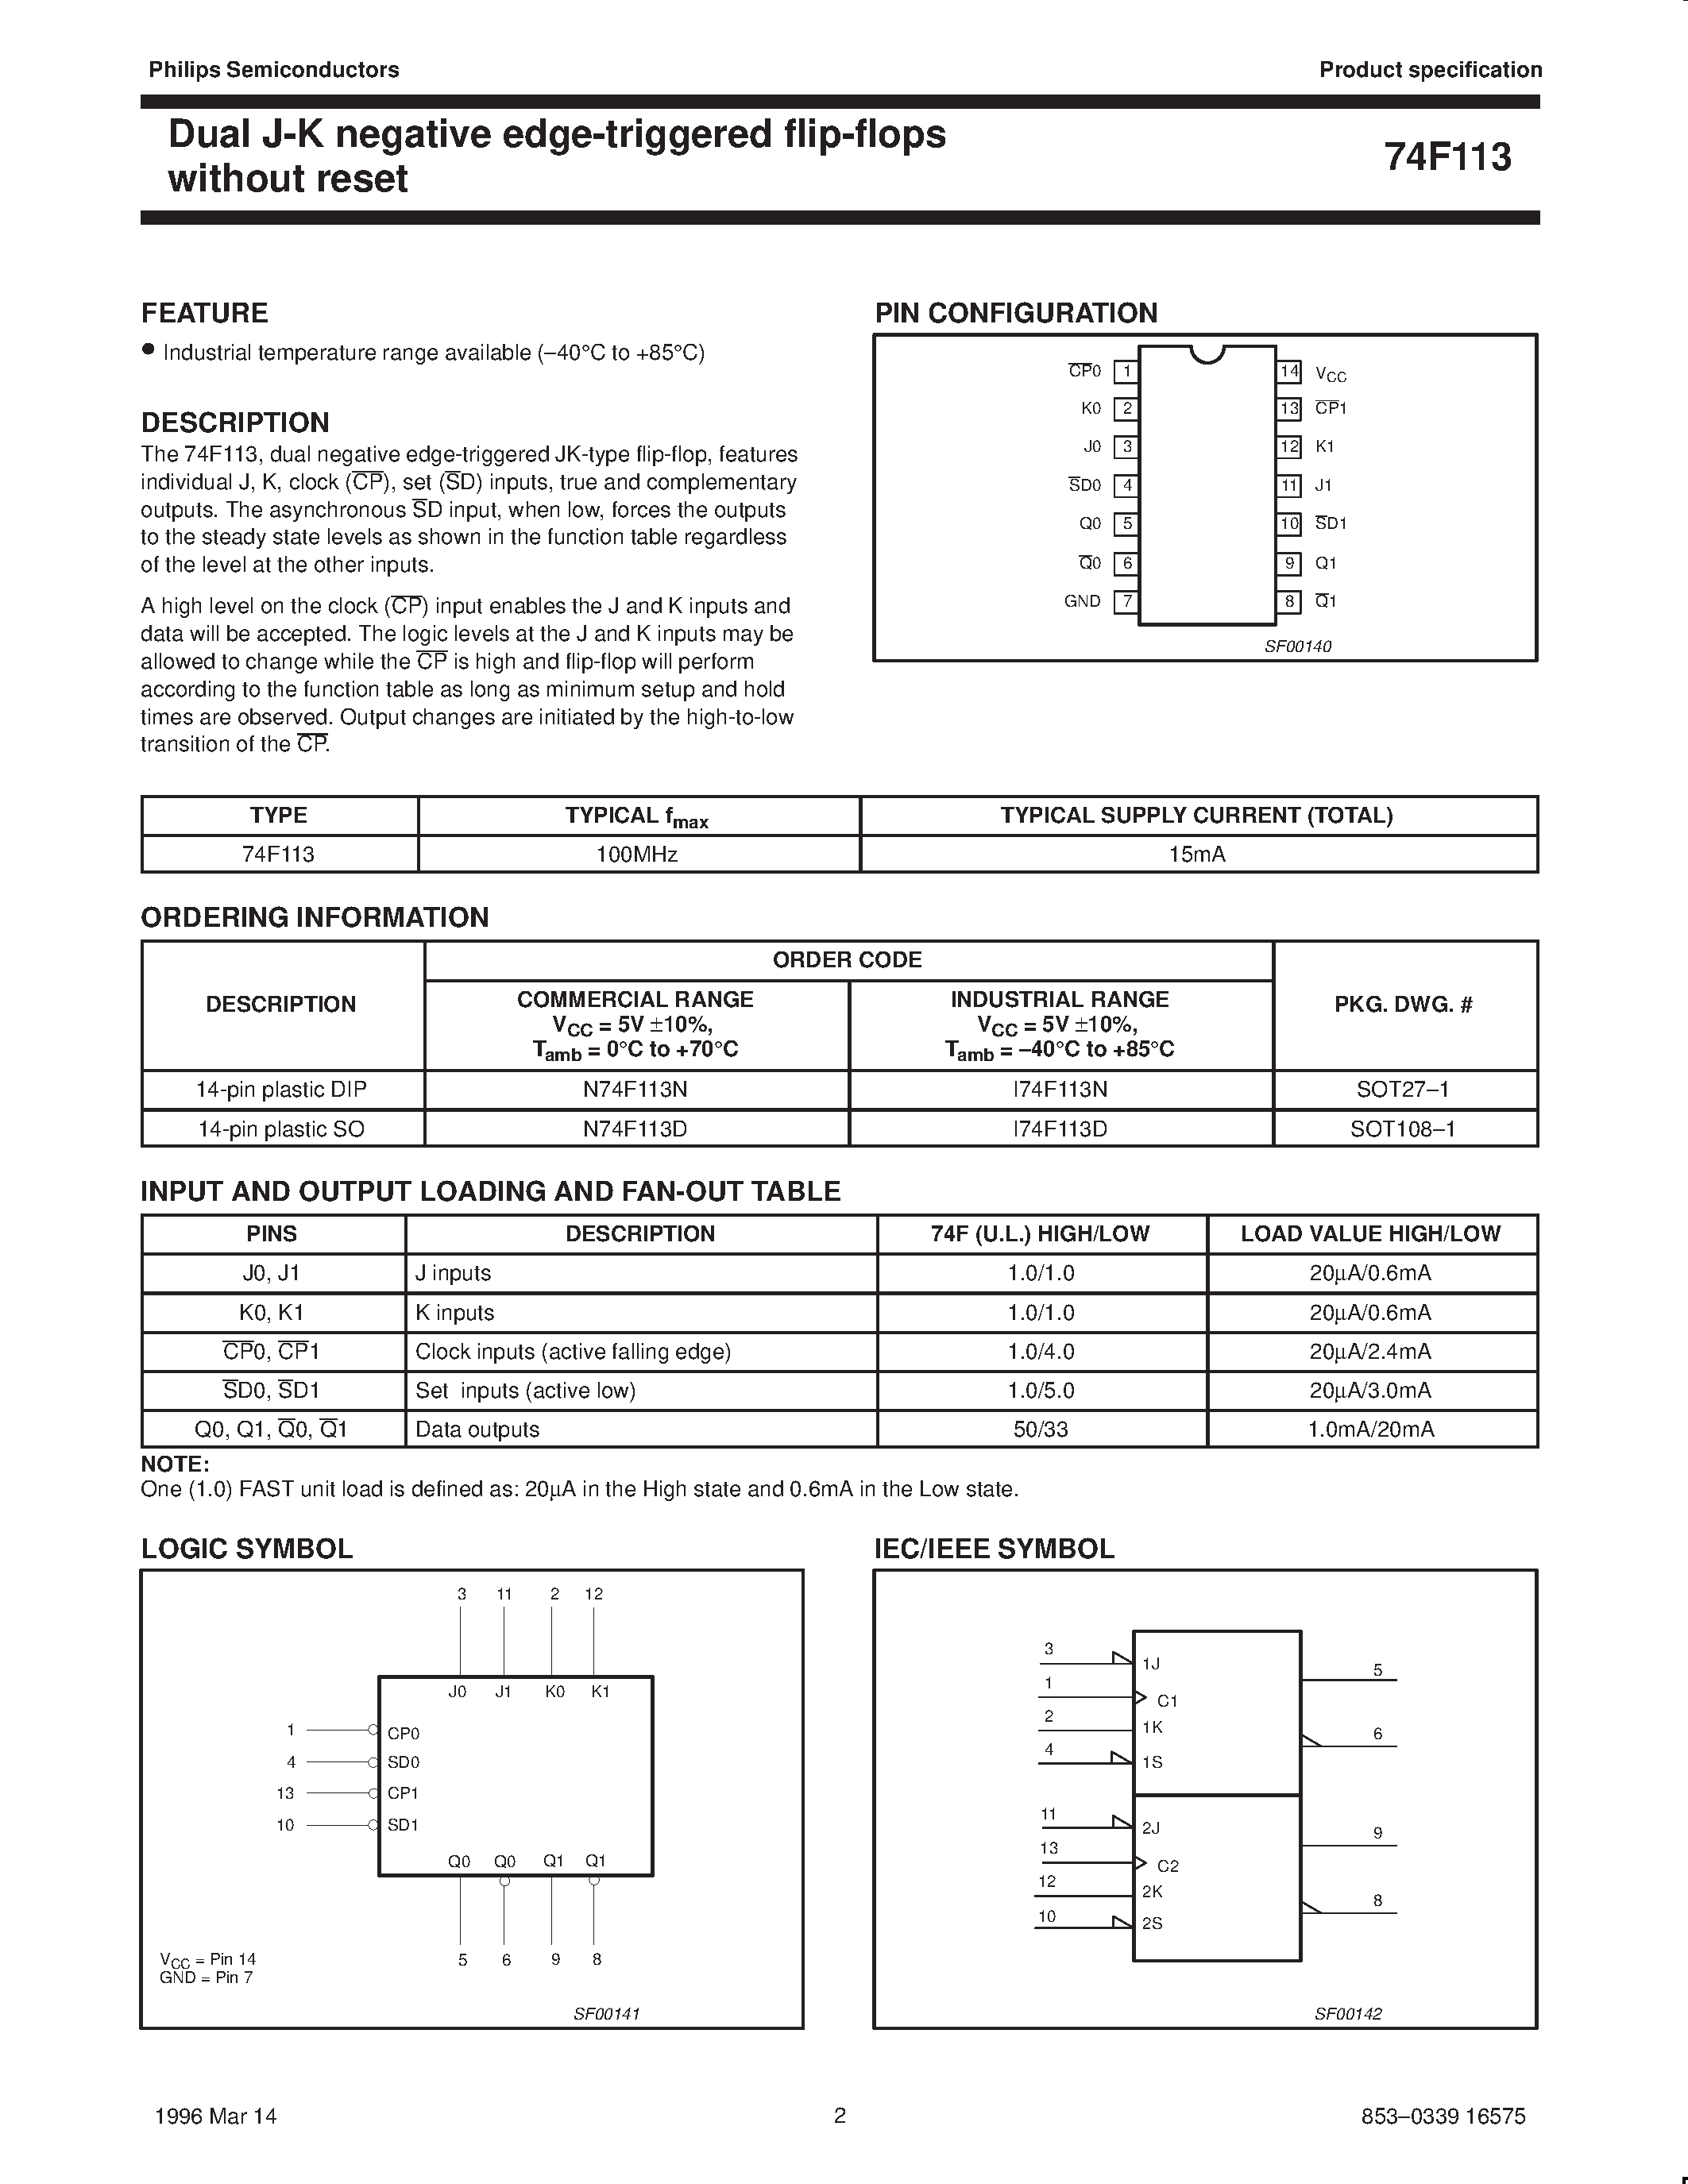 Datasheet N74F113D - Dual J-K negative edge-triggered flip-flops without reset page 2